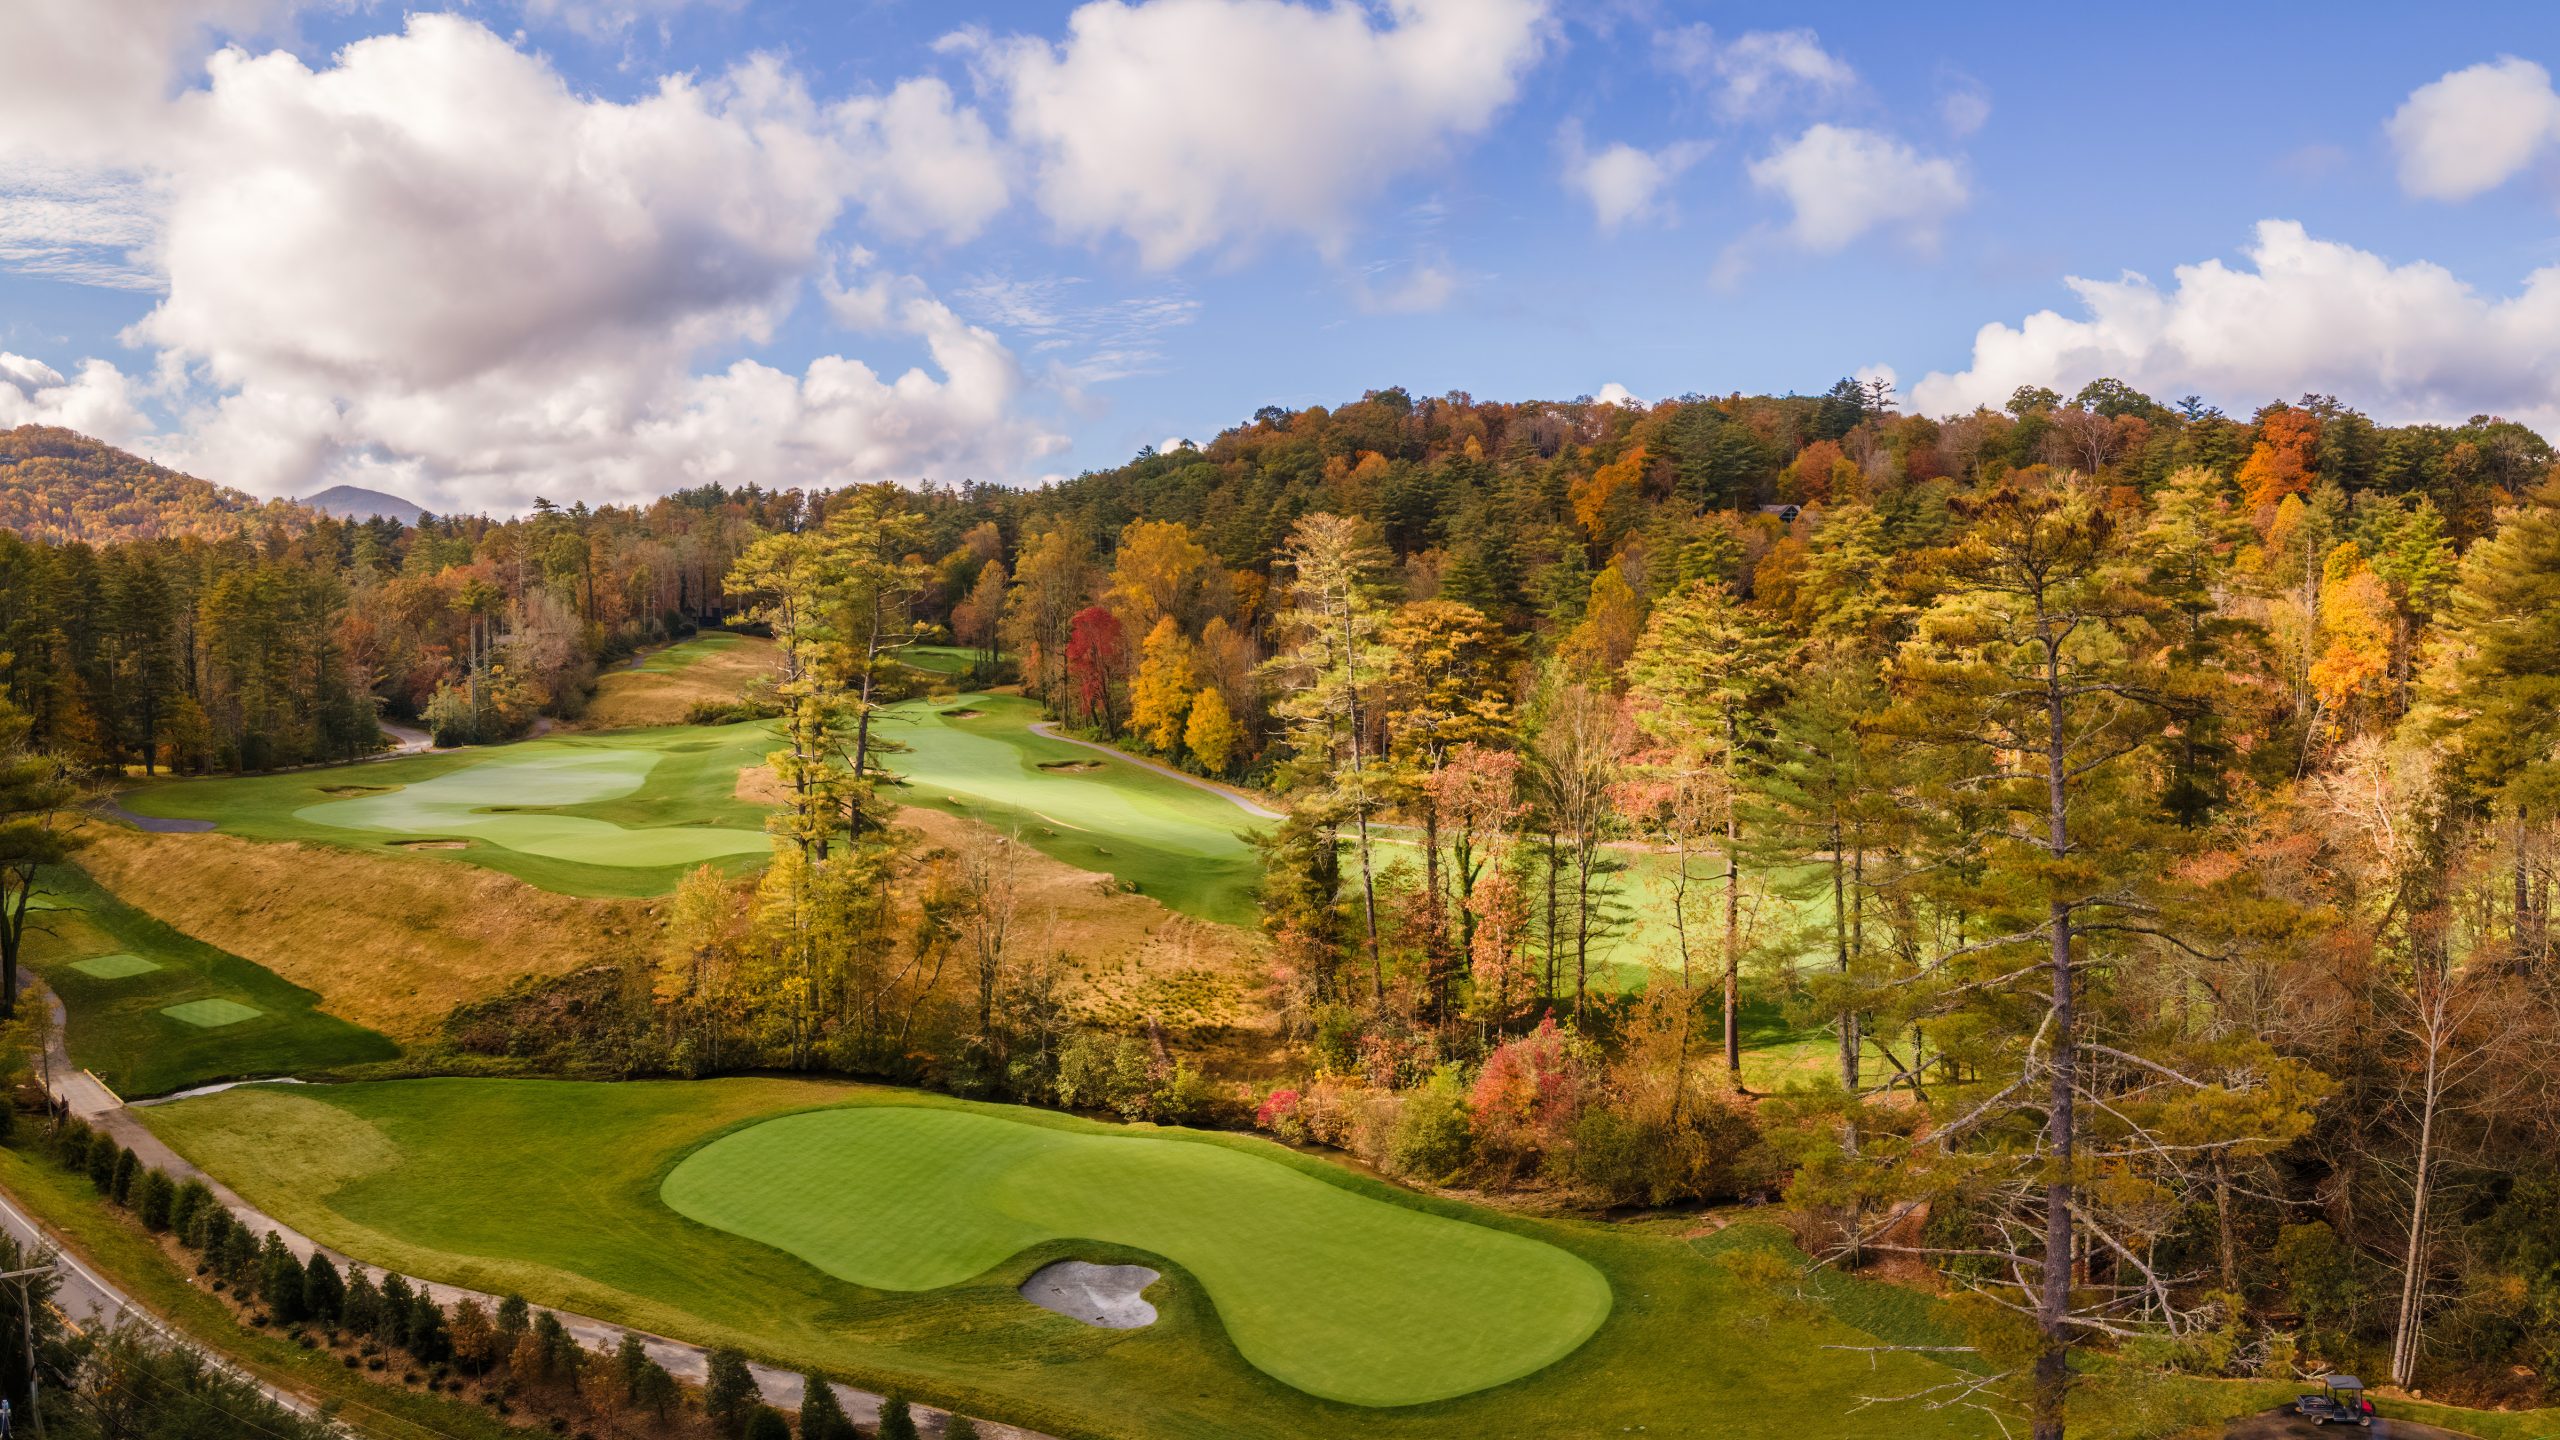 Mountain Golf course in Autumn near Cashiers - North Carolina